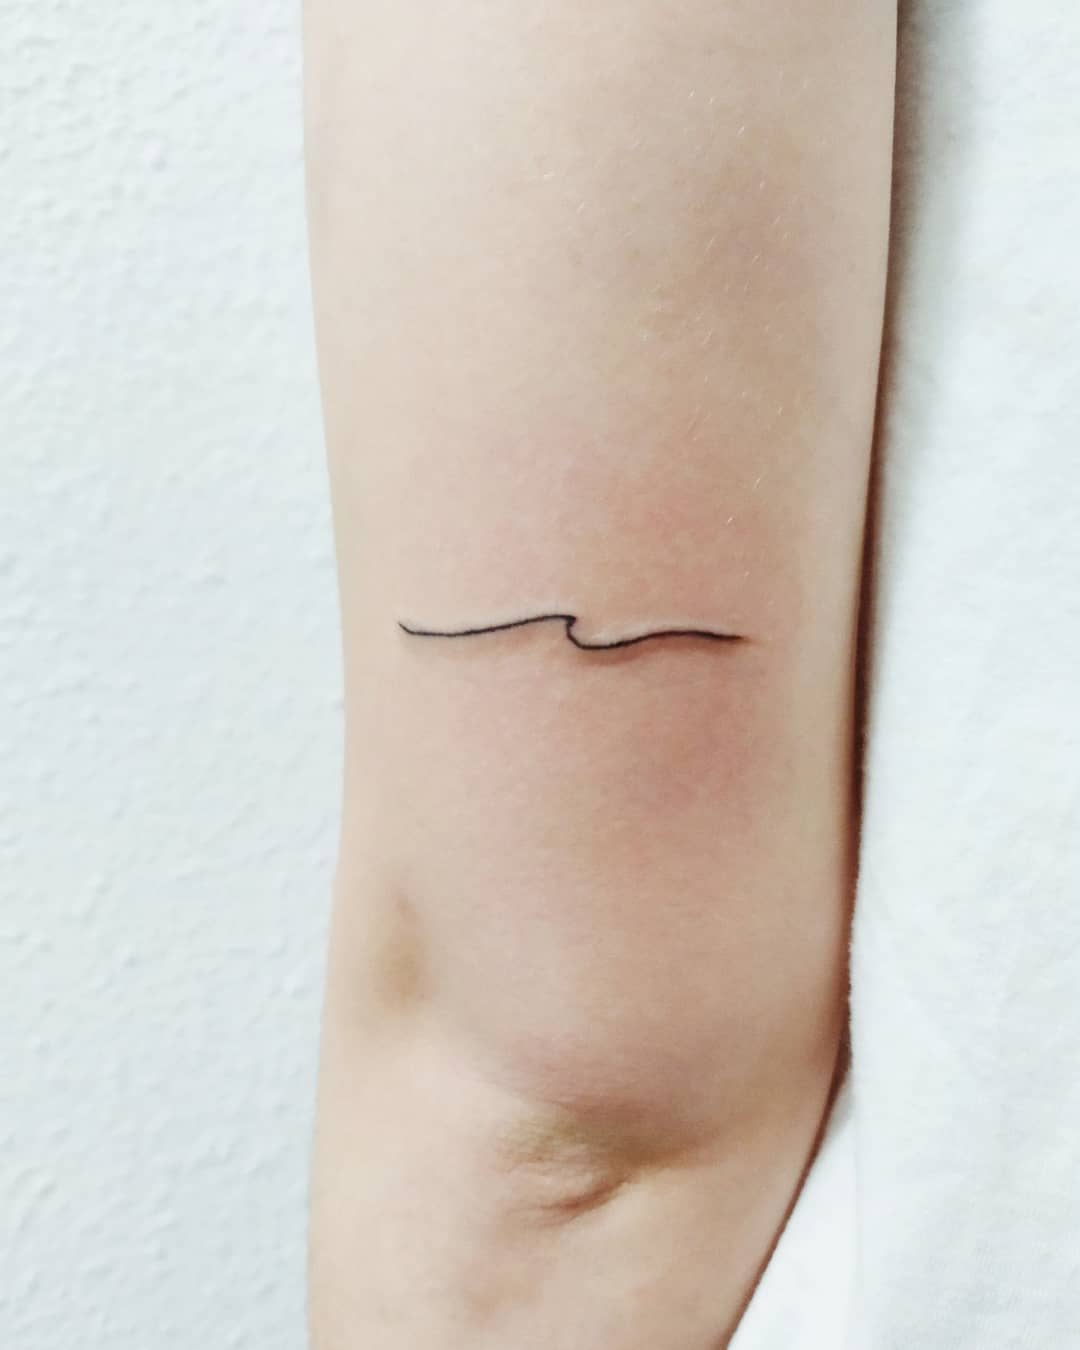 Single needle wave tattoo on the inner forearm.